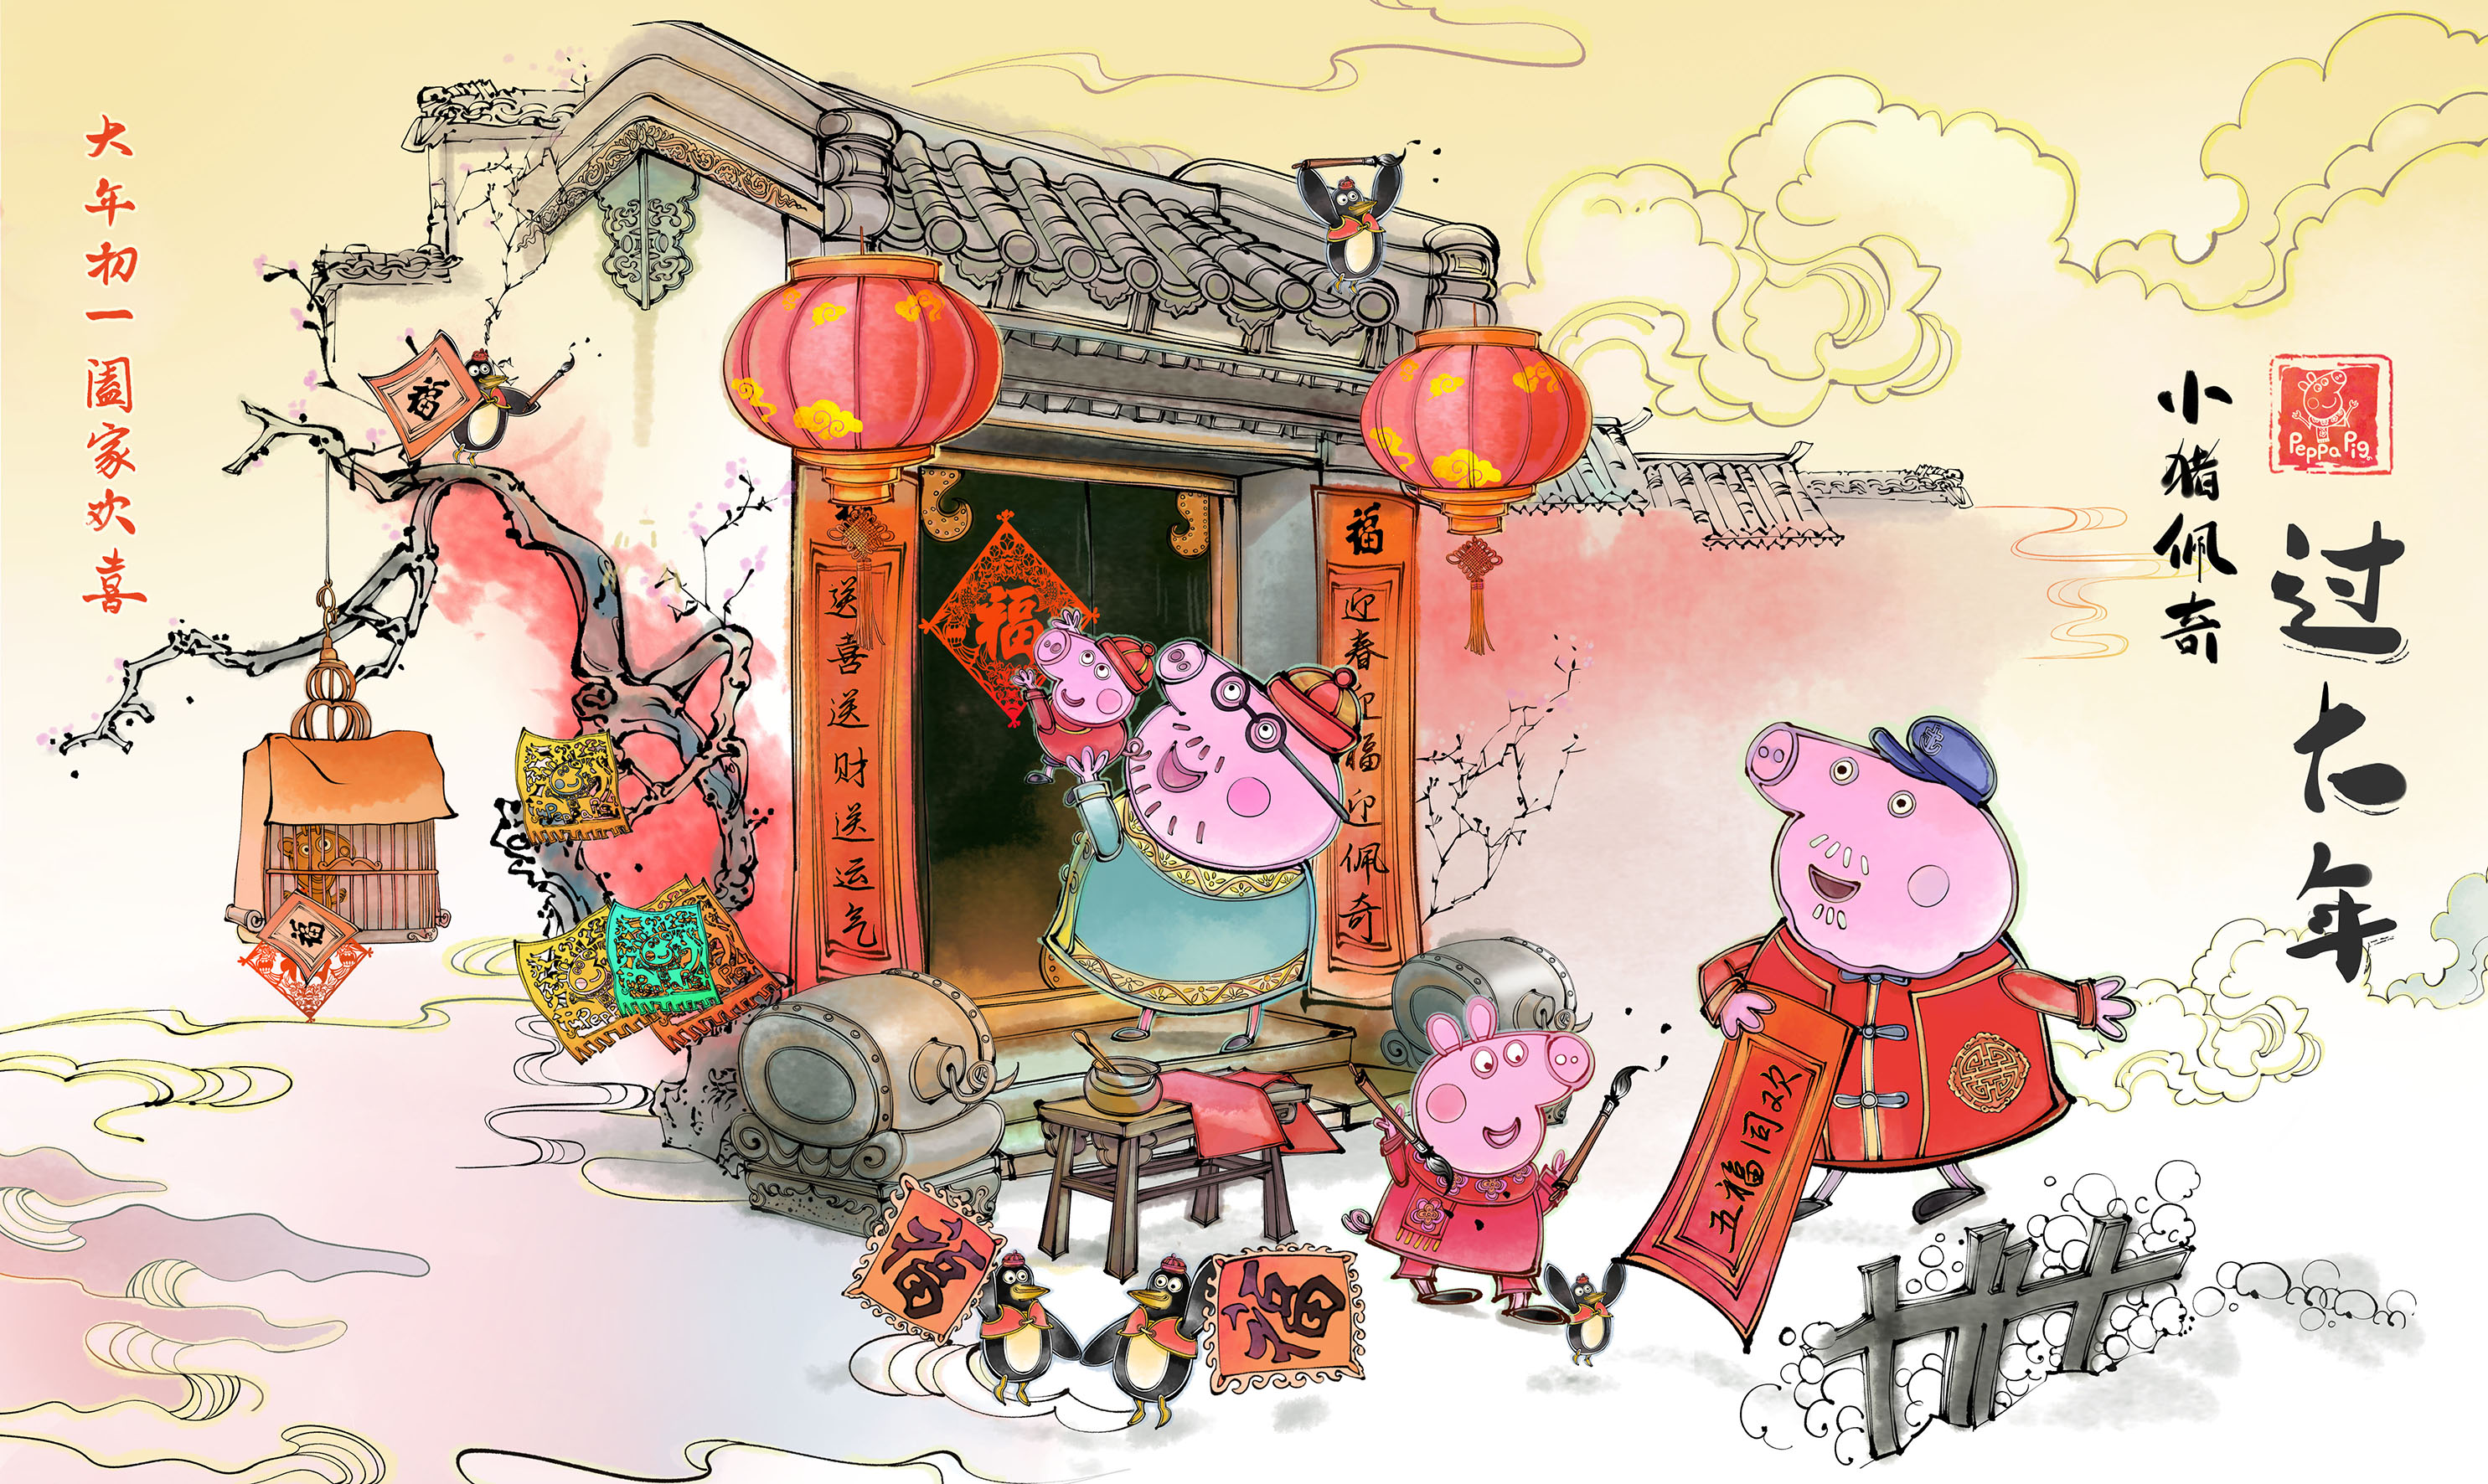 peppa pig celebrates chinese new year_movie poster_20190131